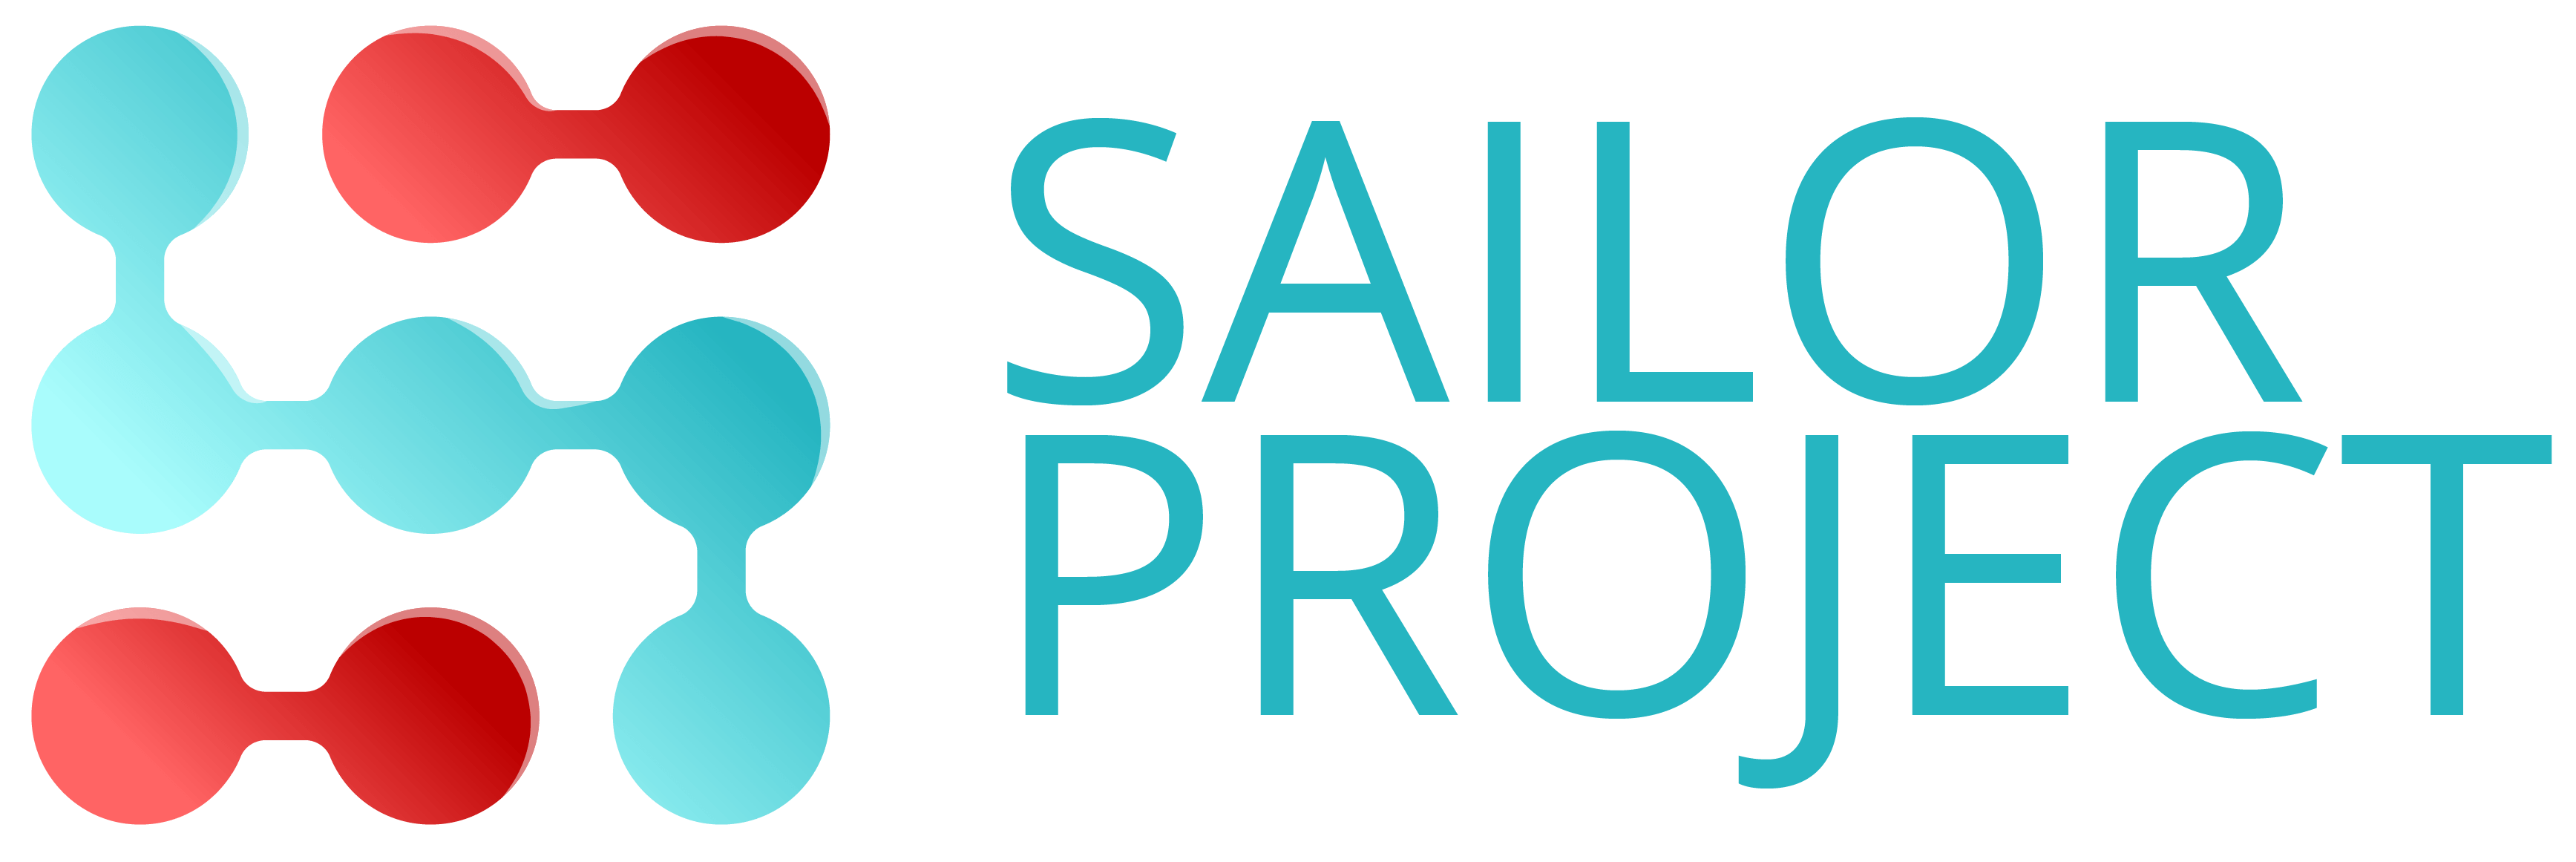 Sailor Project logo